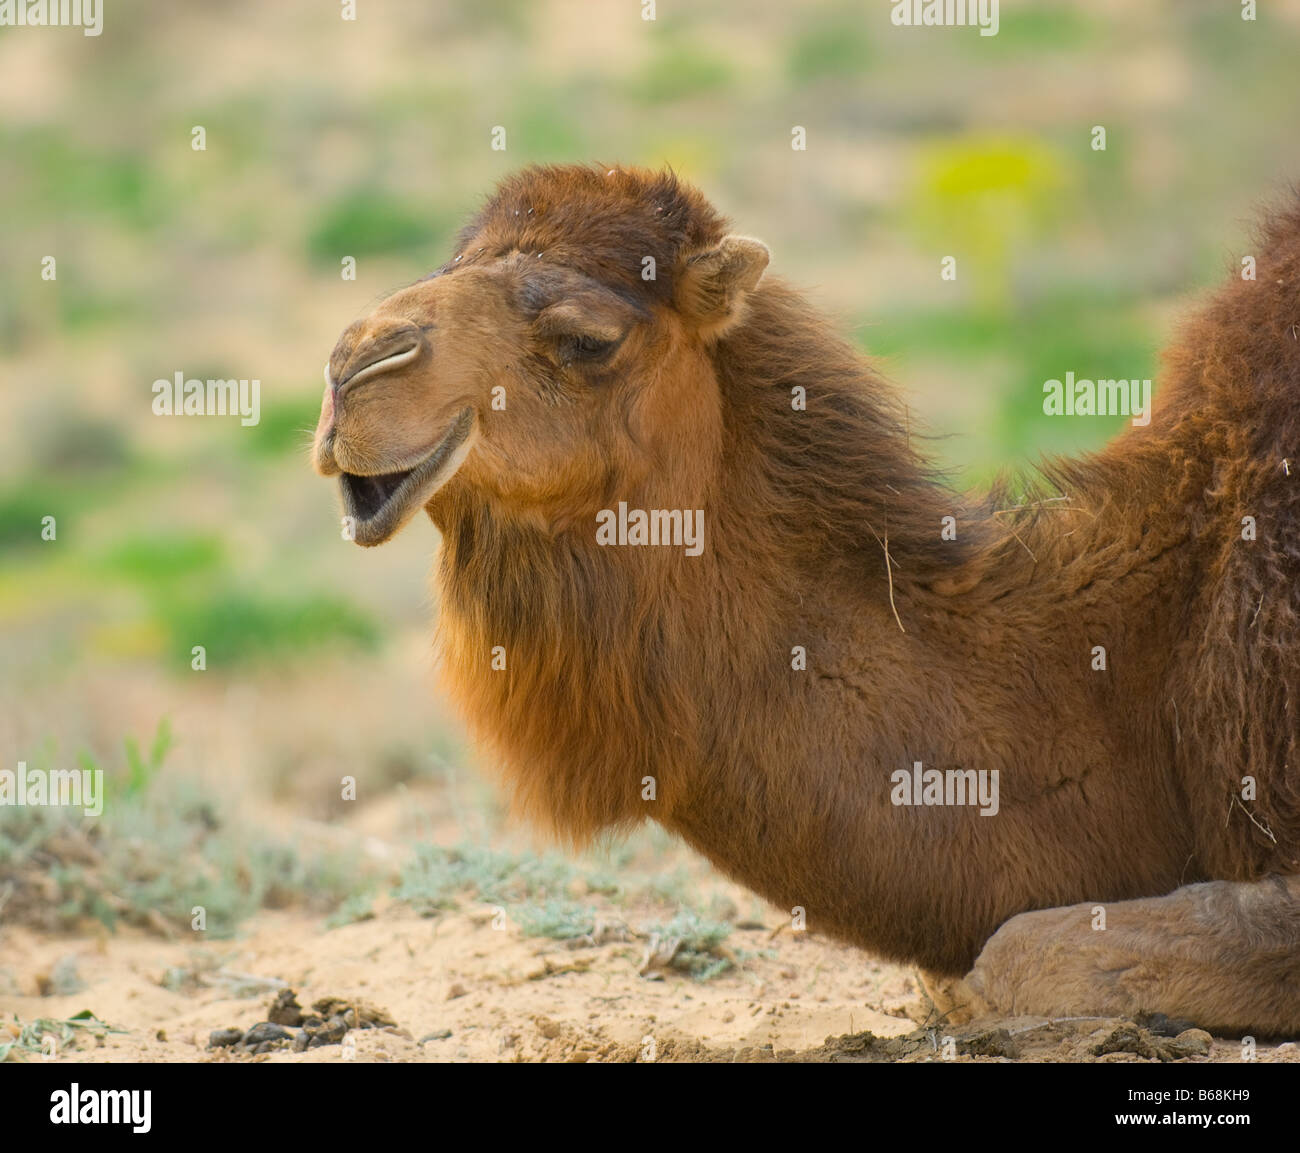 Cerrar imagen de camel Foto de stock